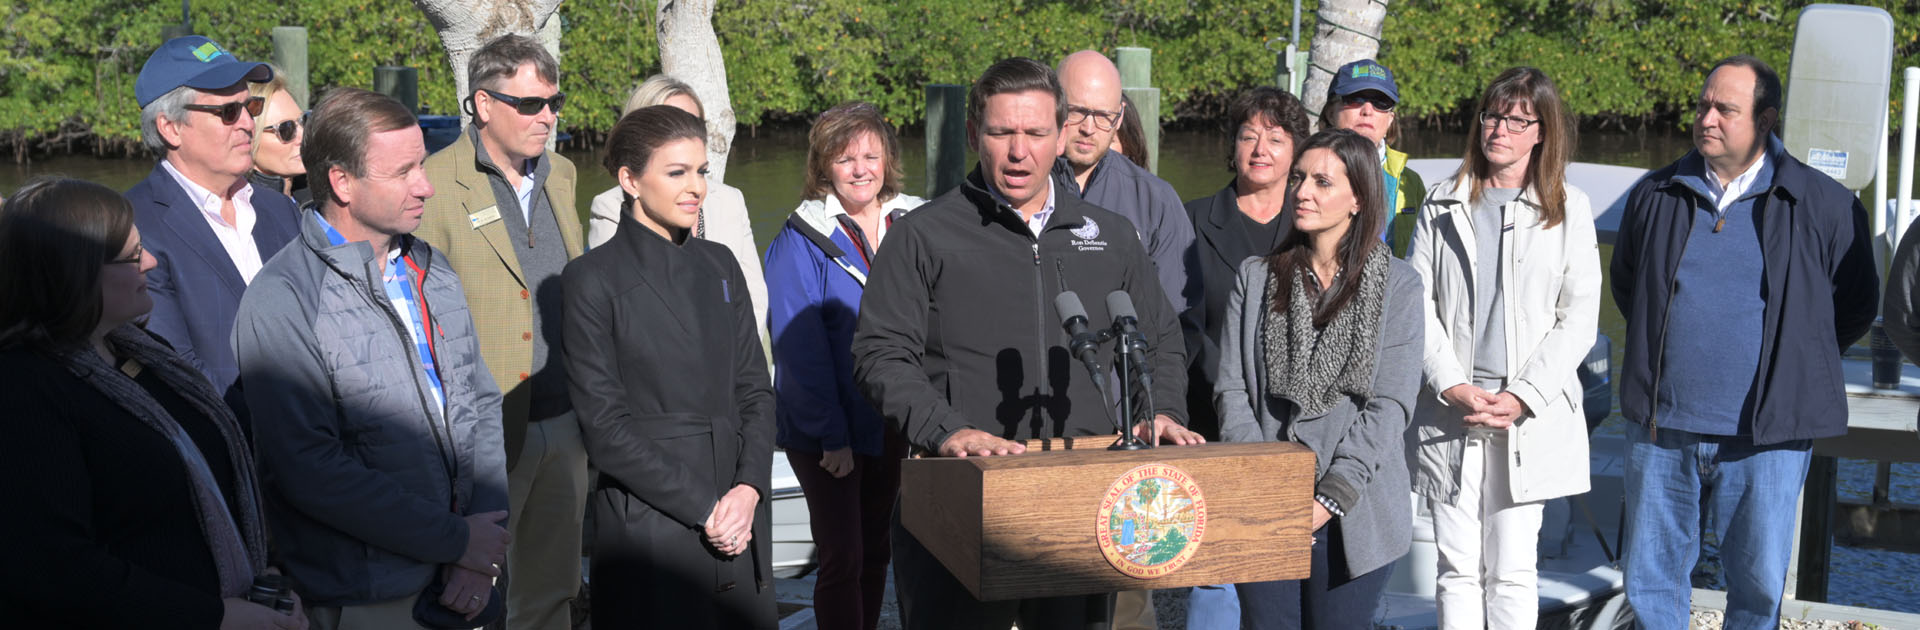 Ron DeSantis - Protecting Florida Together Executive Order